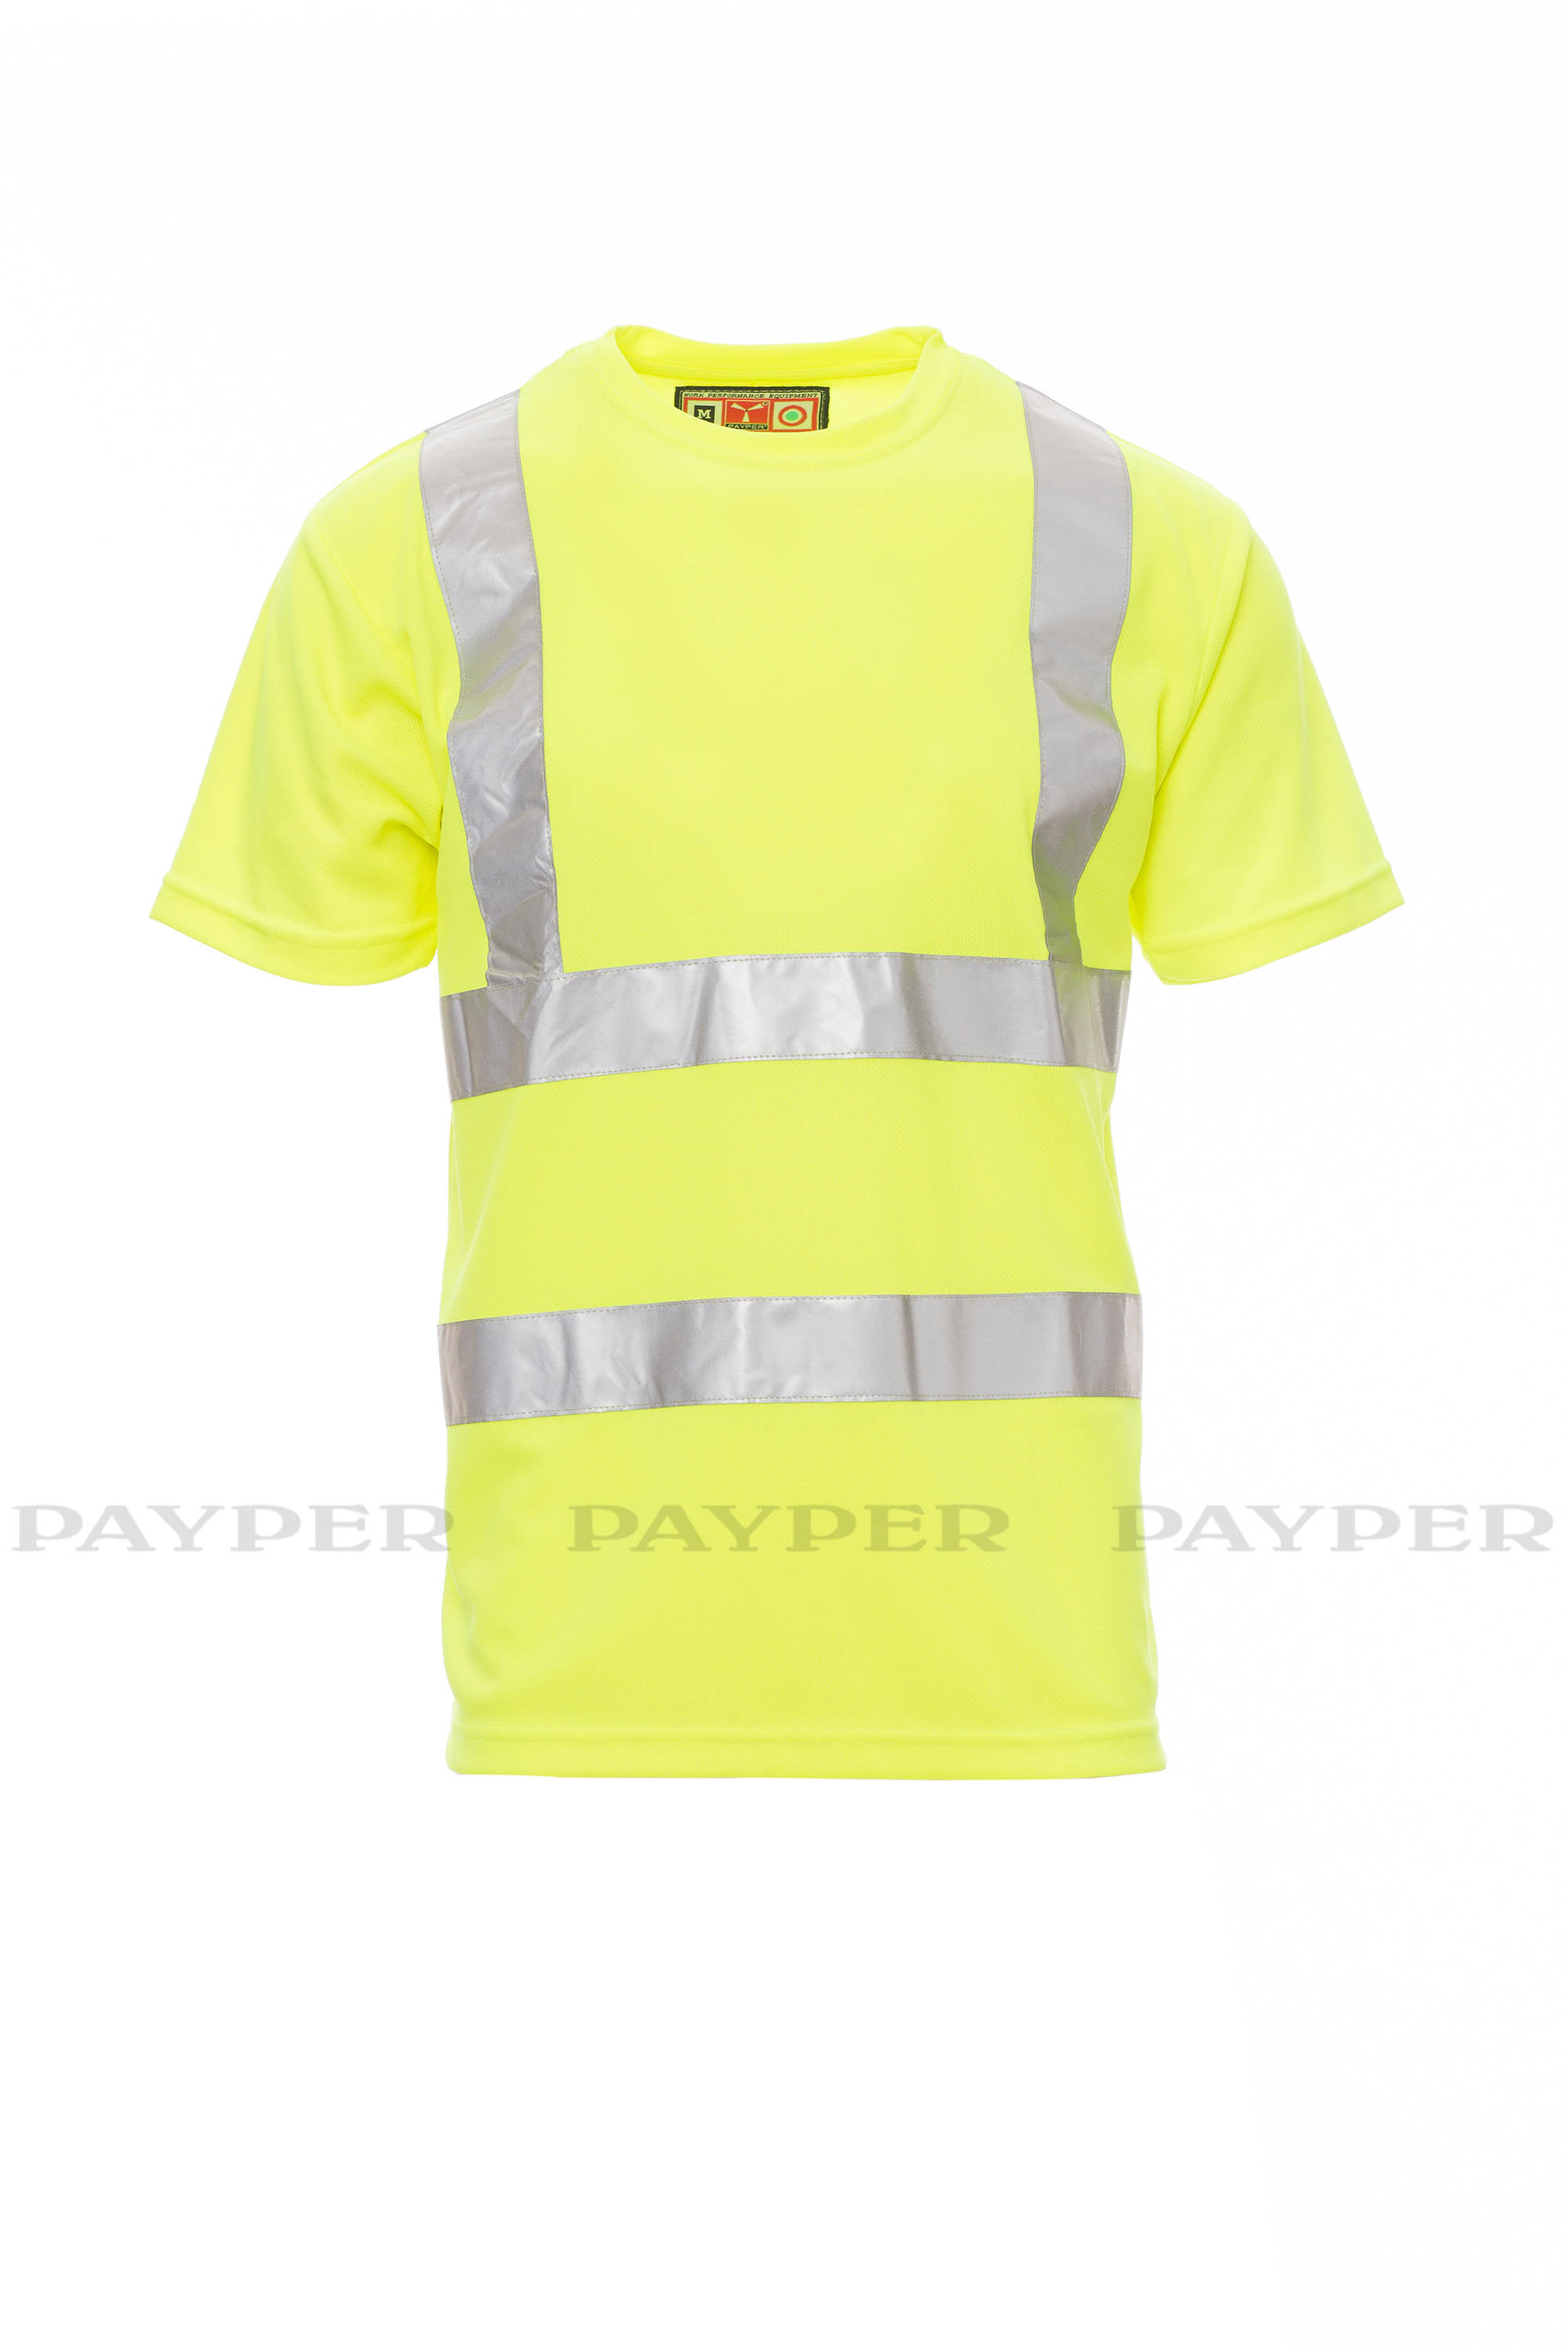 Payper - Warnschutz T-Shirt Avenue